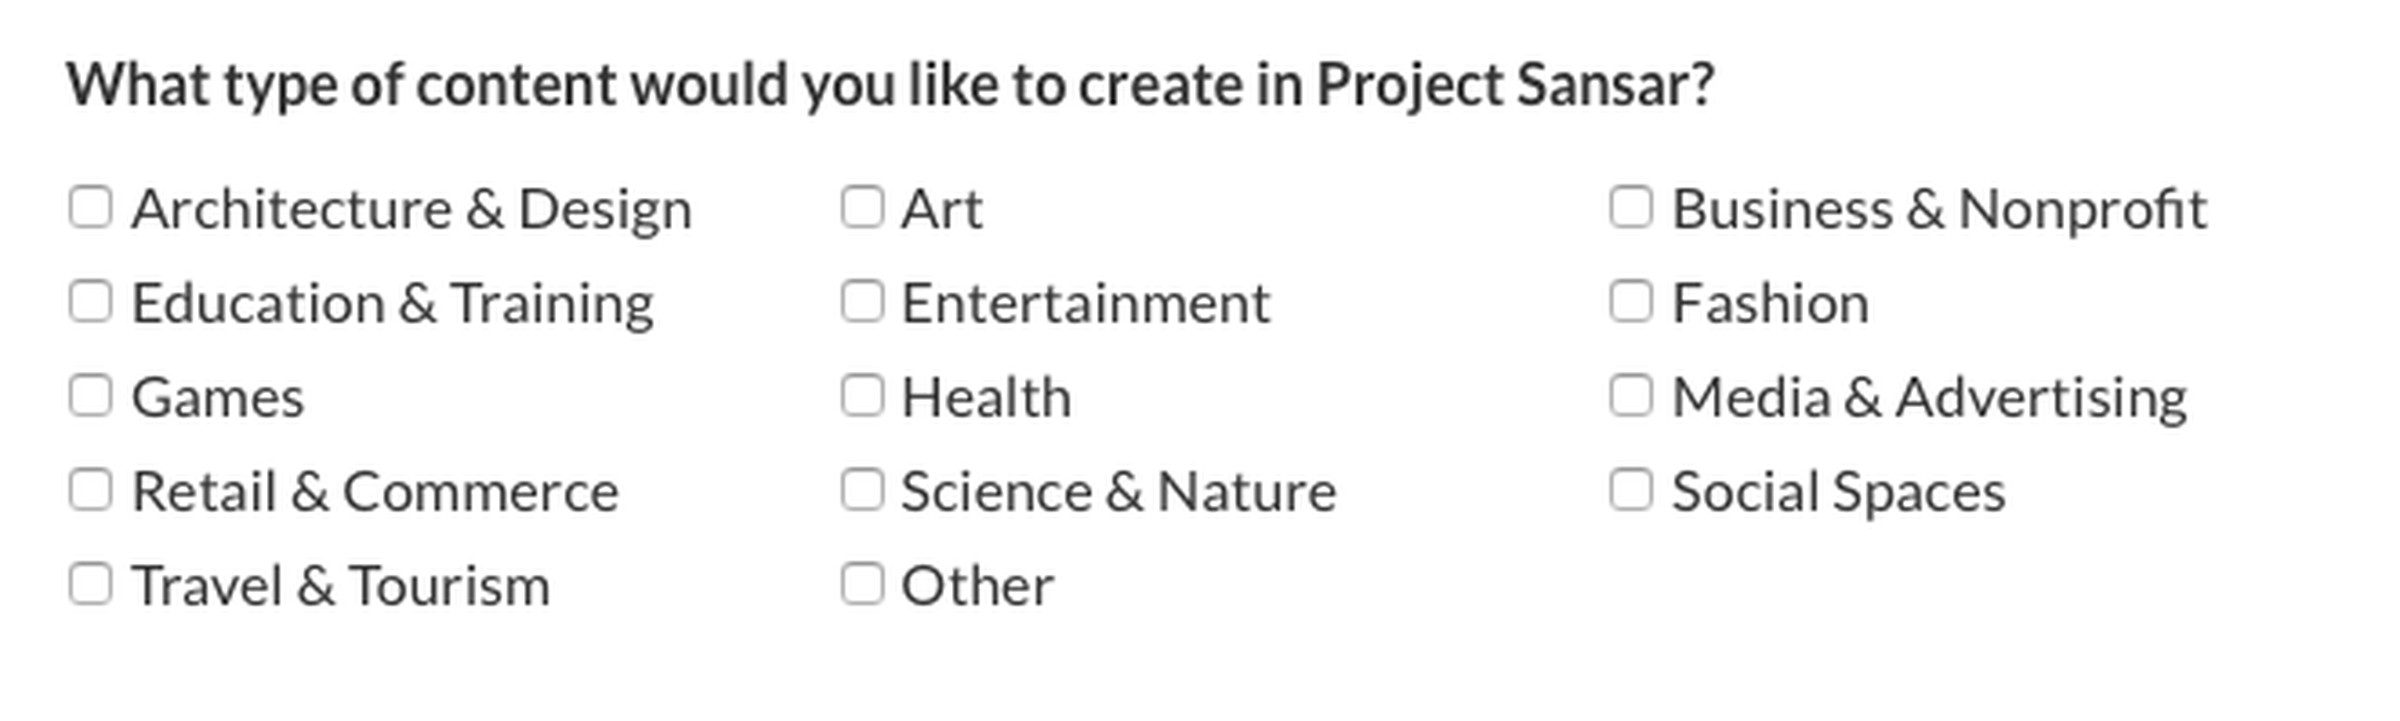 Project Sansar Application